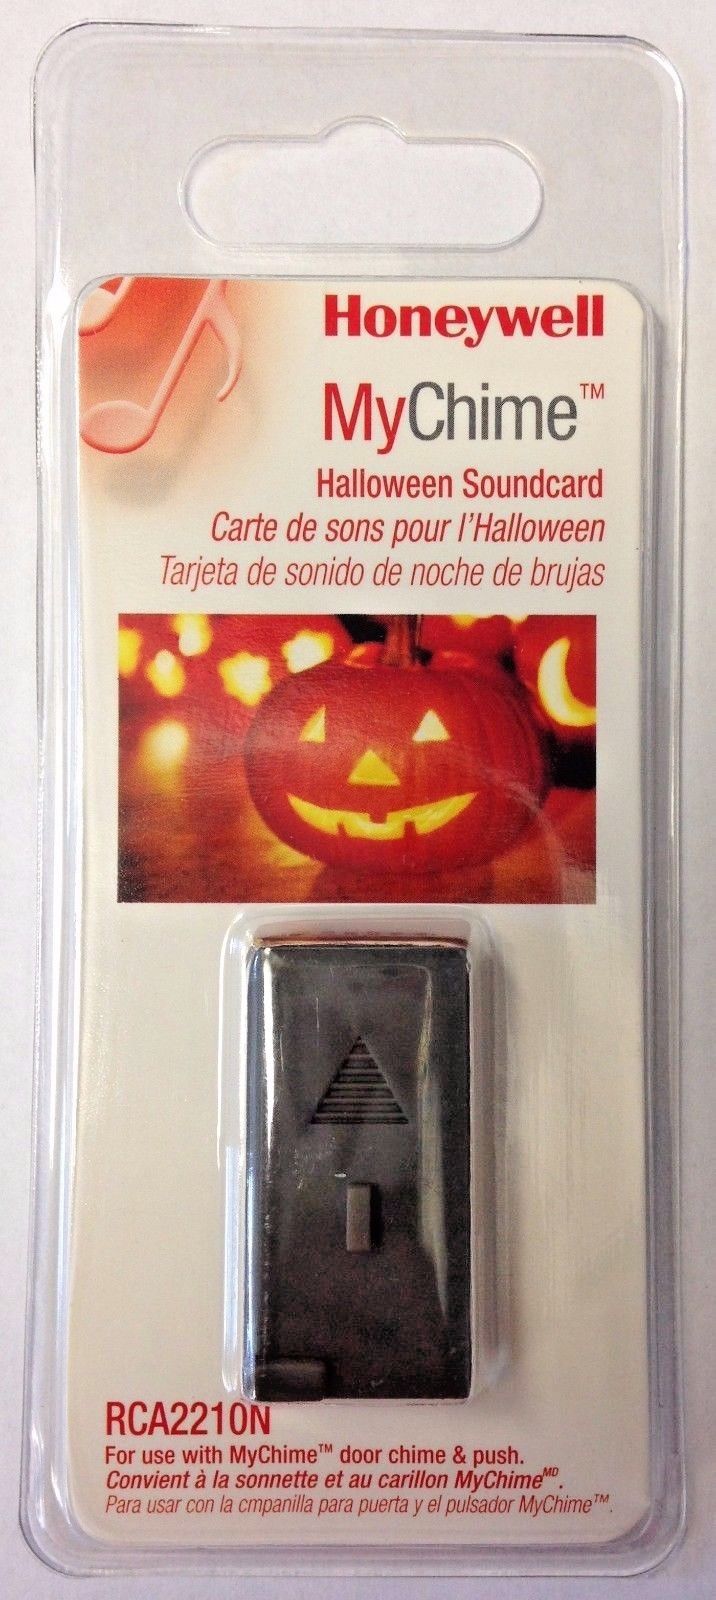 Honeywell RCA2210N MyChime Halloween Door Chime Soundcard